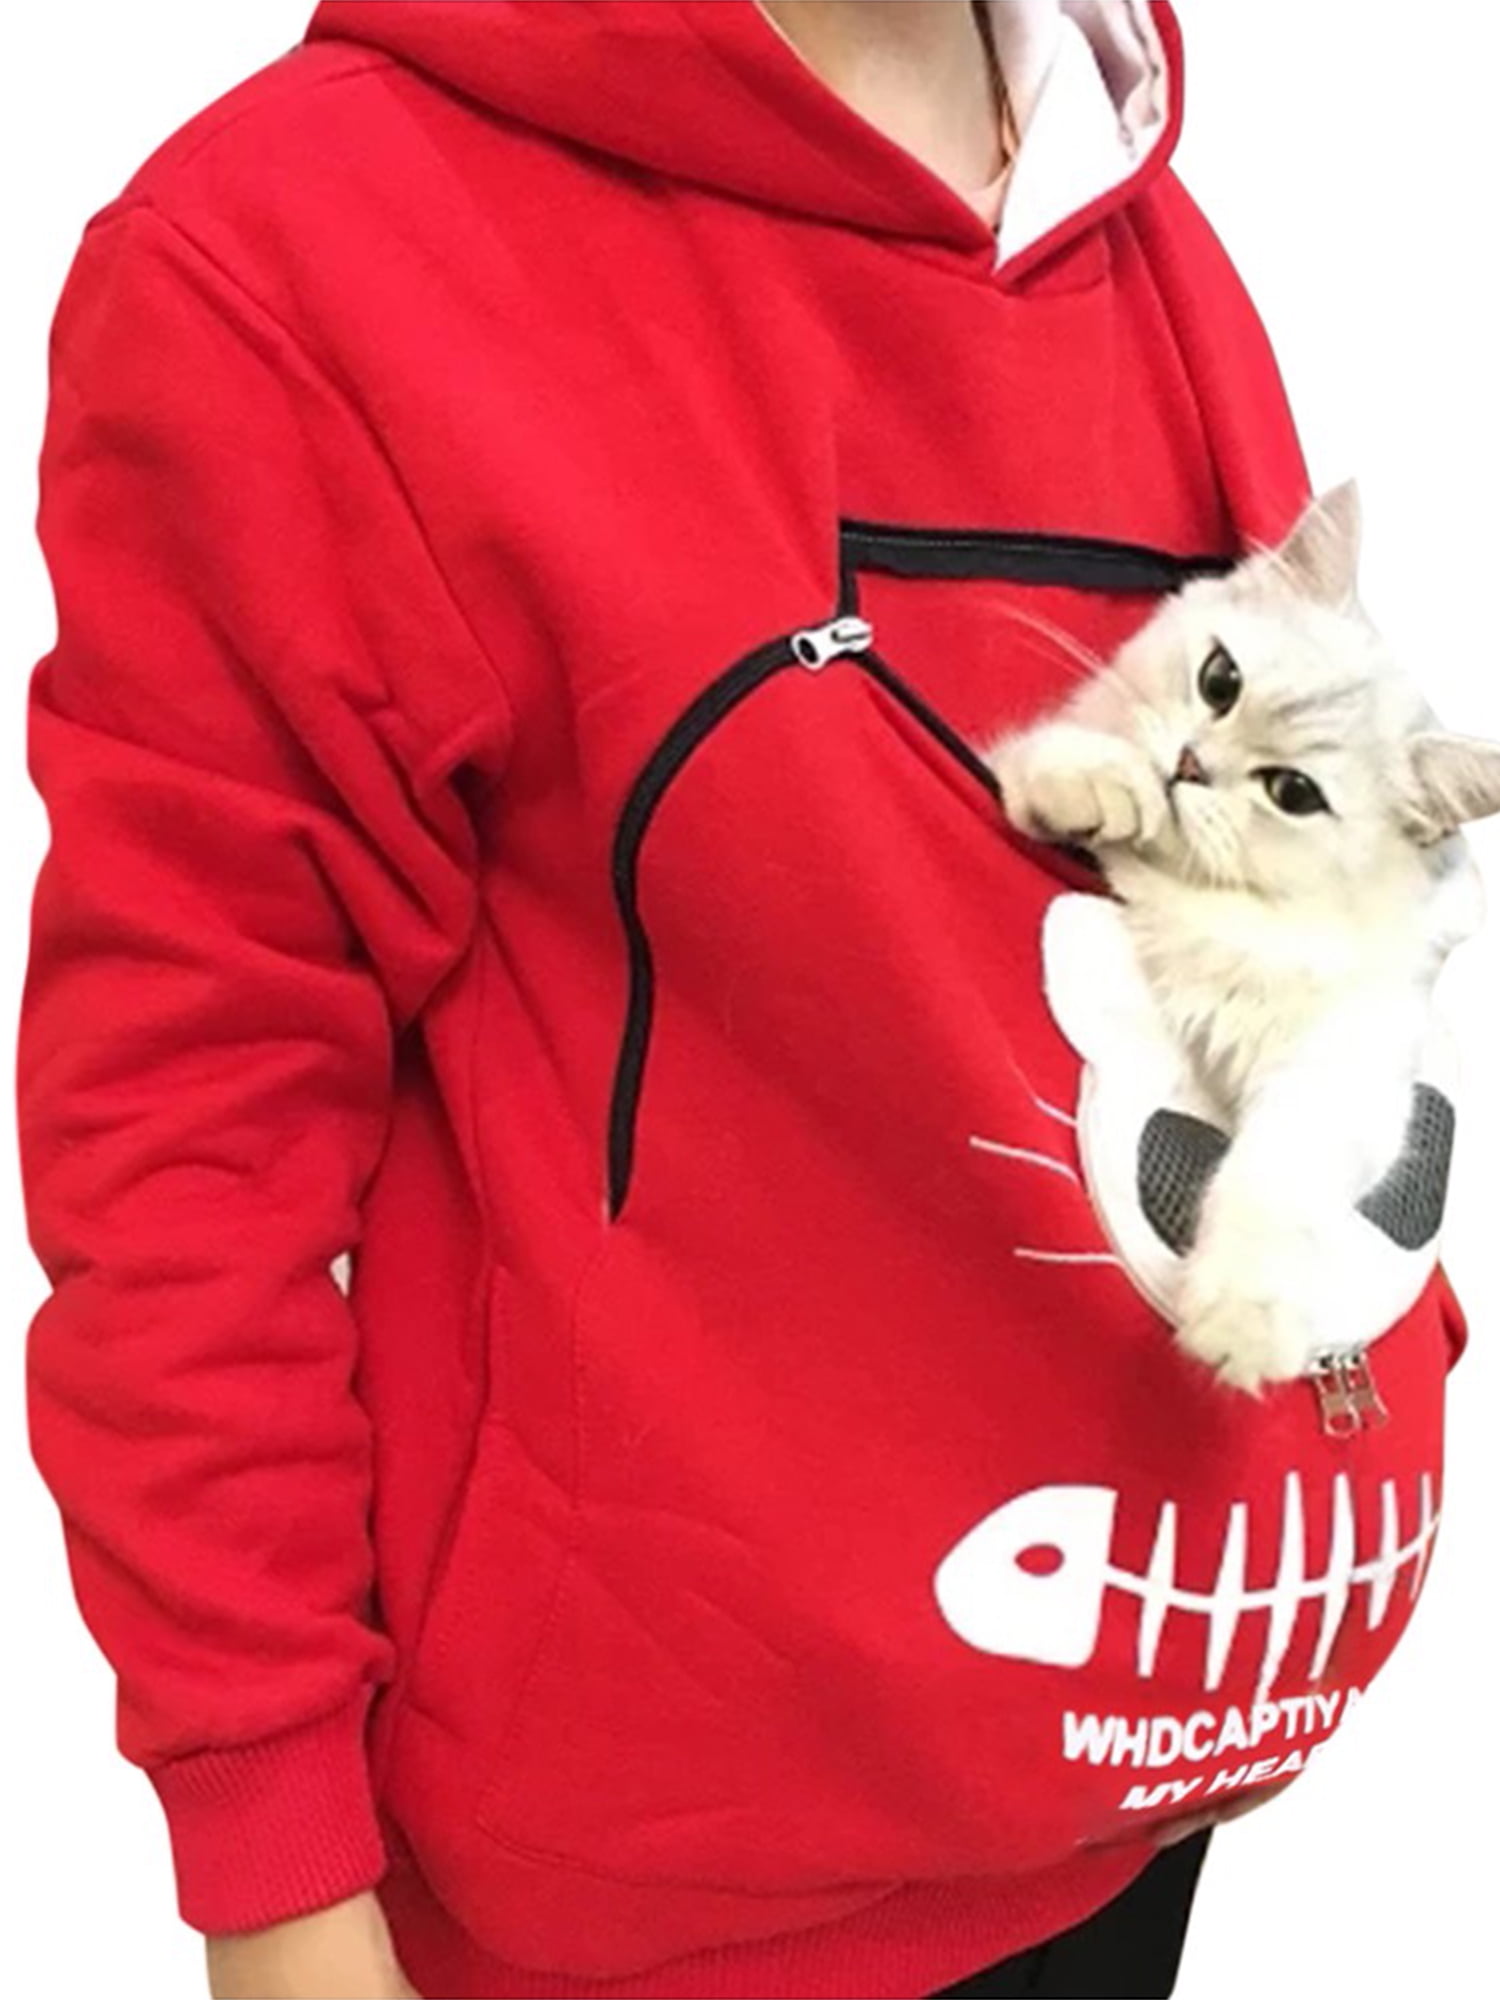 Unisex Pet Carrier Hoodie Sweatshirt Womens Cat Dog Big Pouch Holder Ear Hooded Pullover Shirts